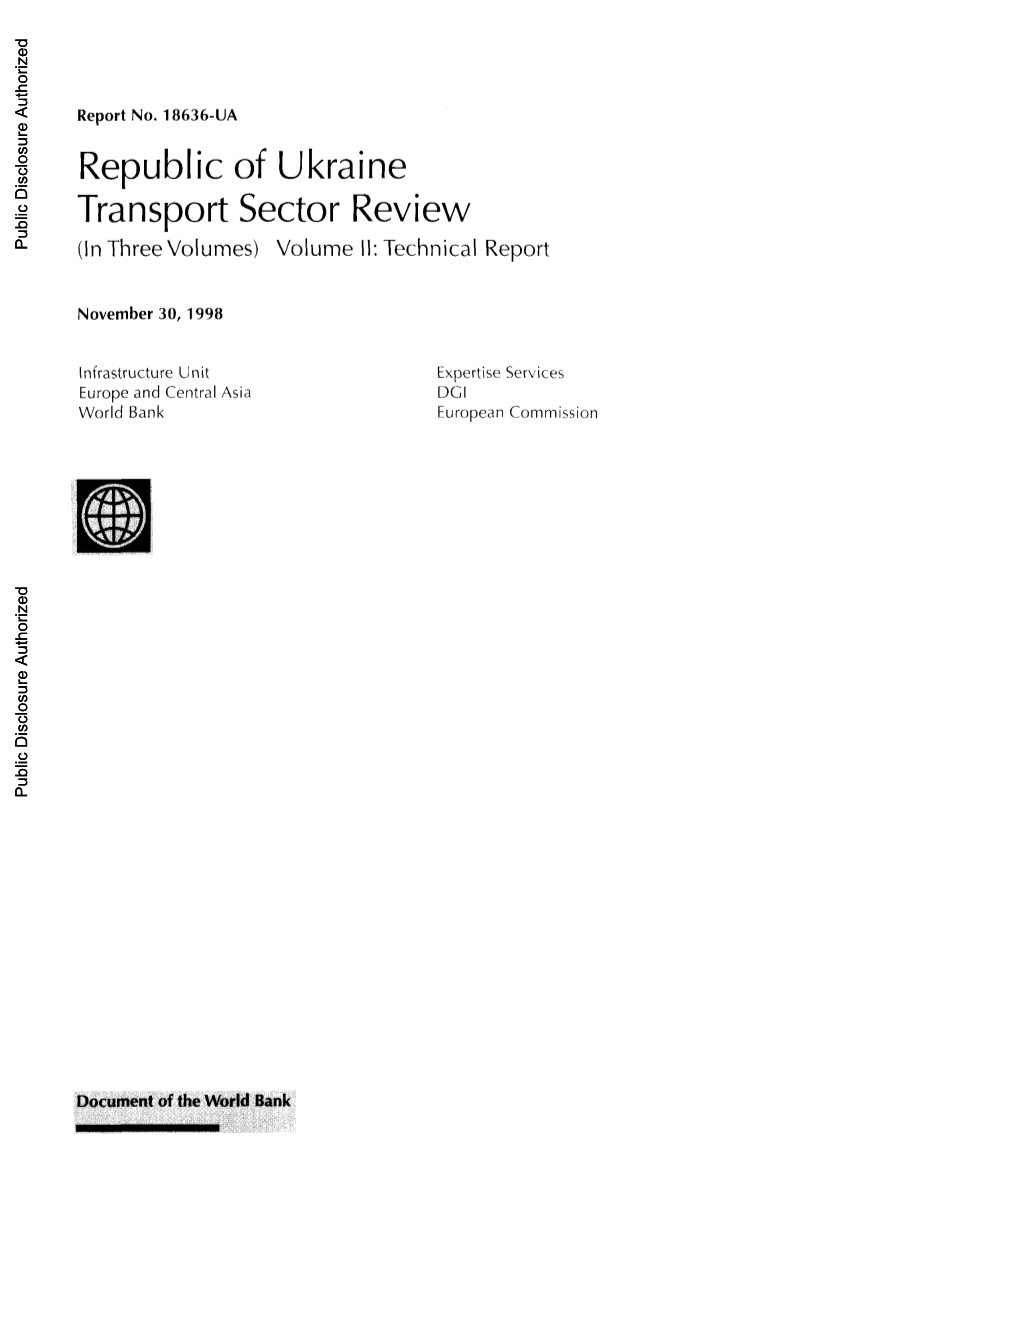 Republic of Ukraine Transport Sector Review